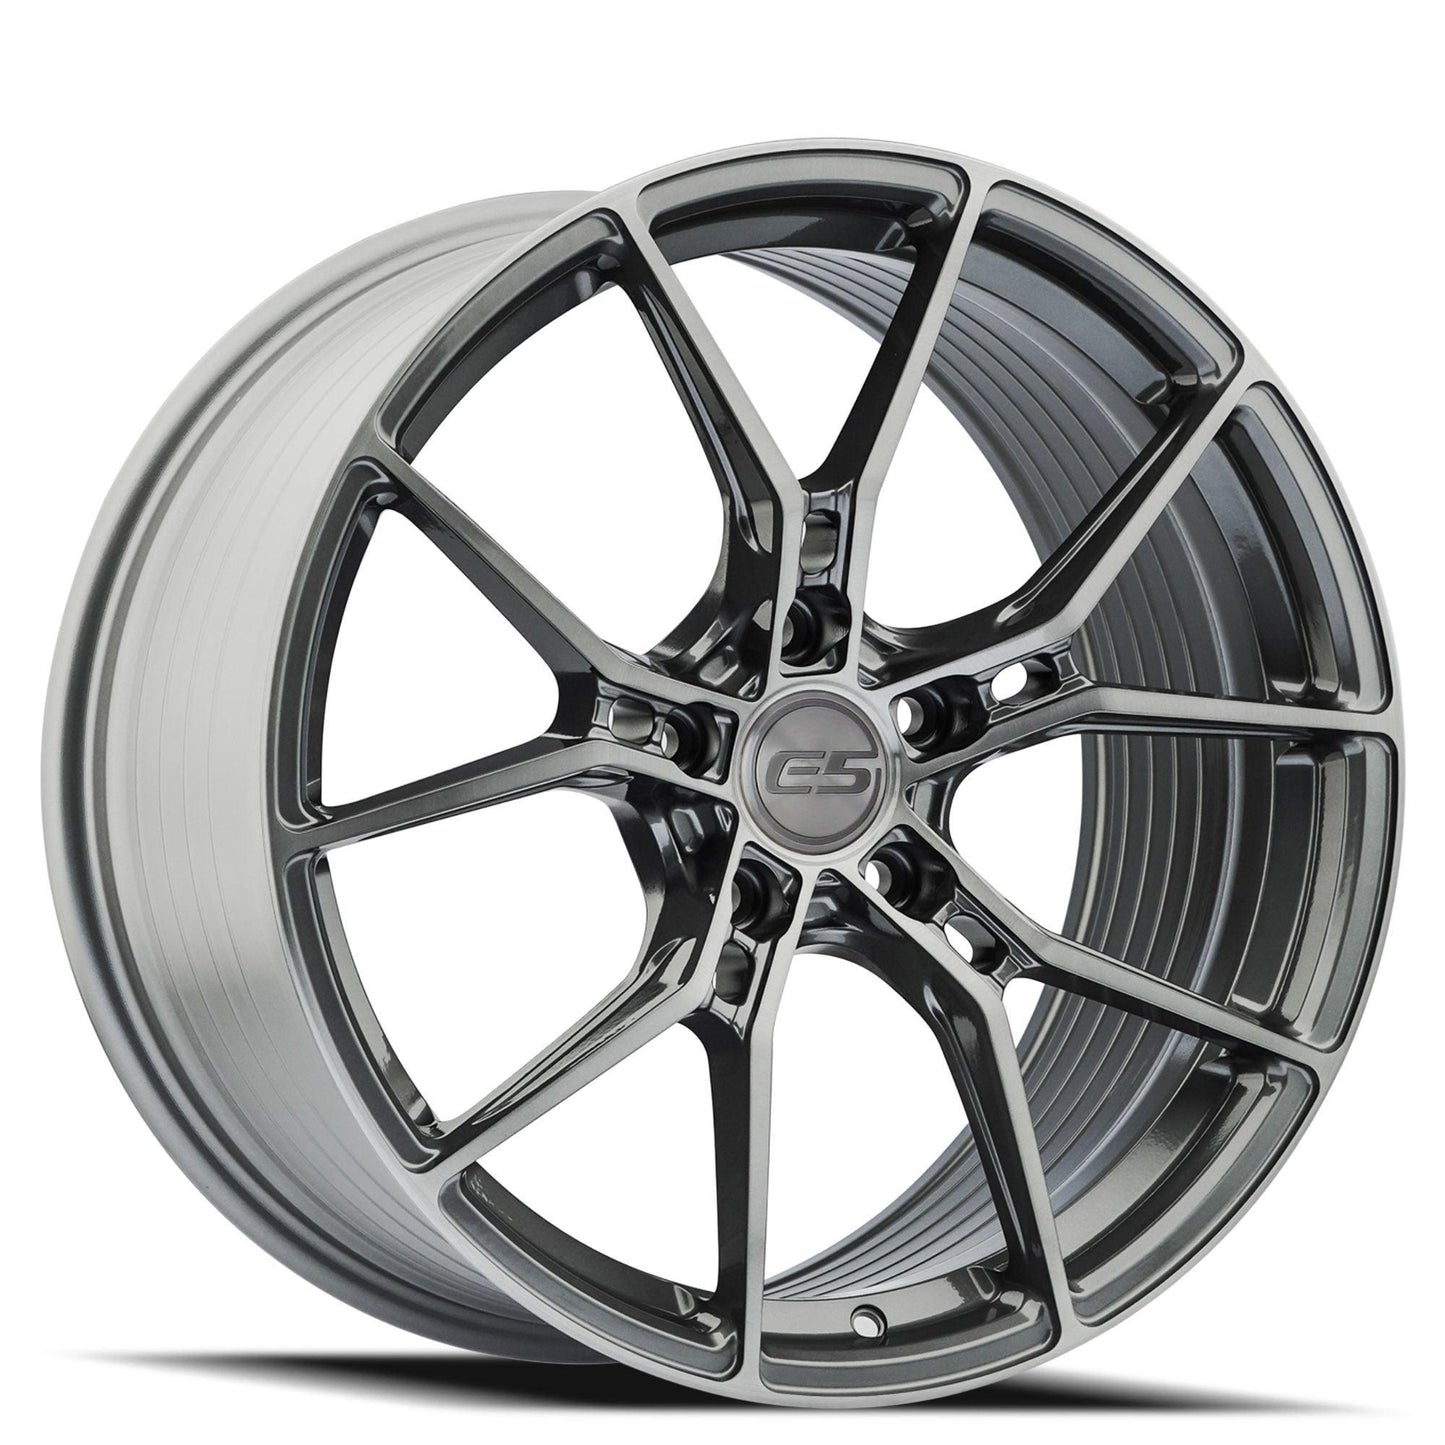 E5 Daytona 19x10 / 20x12 wheels for C7 Corvette Z51 Z06 / Grand Sport - Gem Motorsports